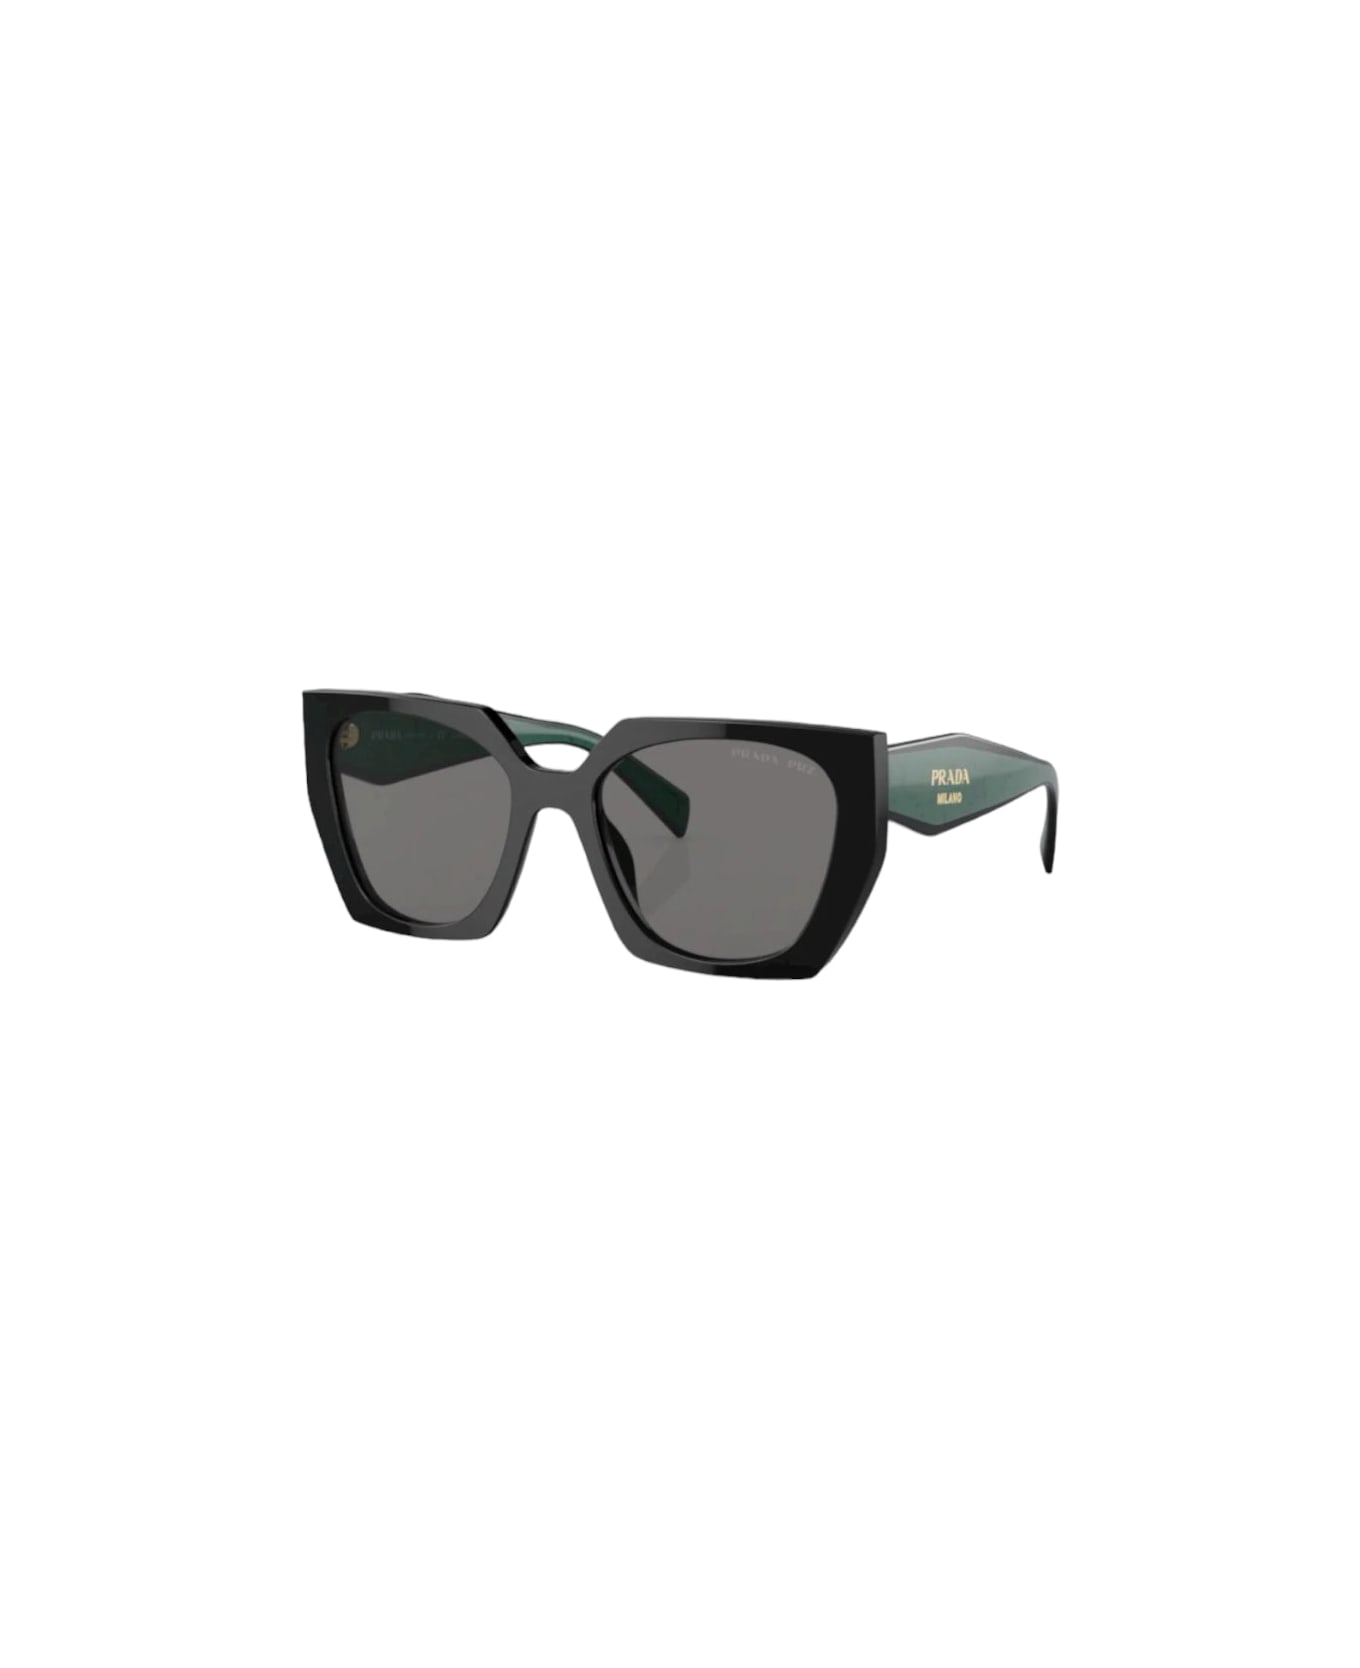 Prada Eyewear Spr 15w - Black Sunglasses